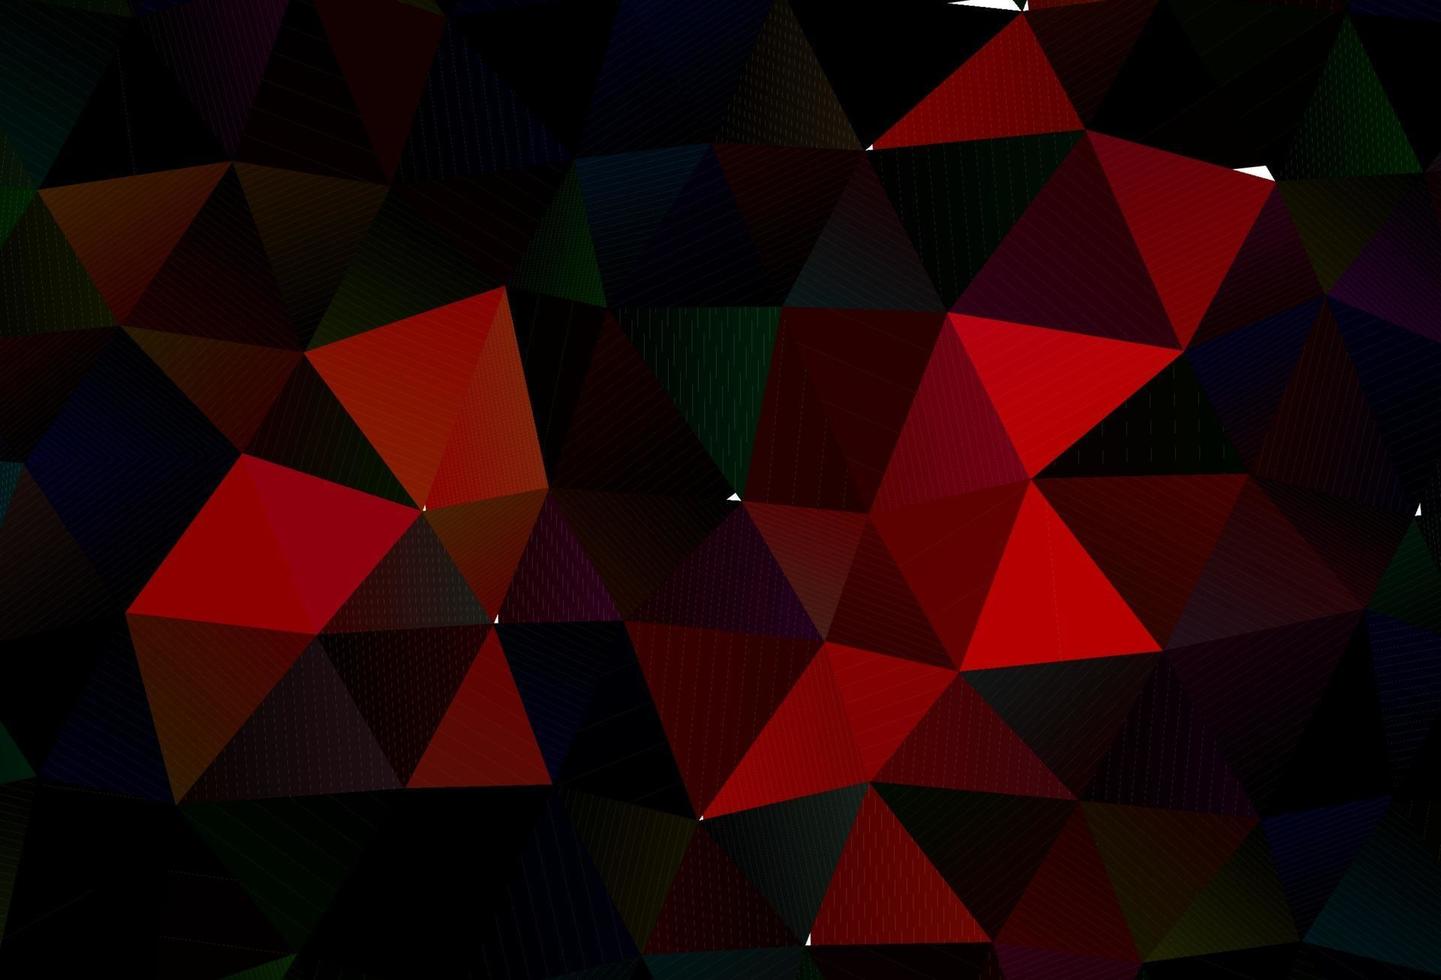 licht rode vector abstracte mozaïek achtergrond.